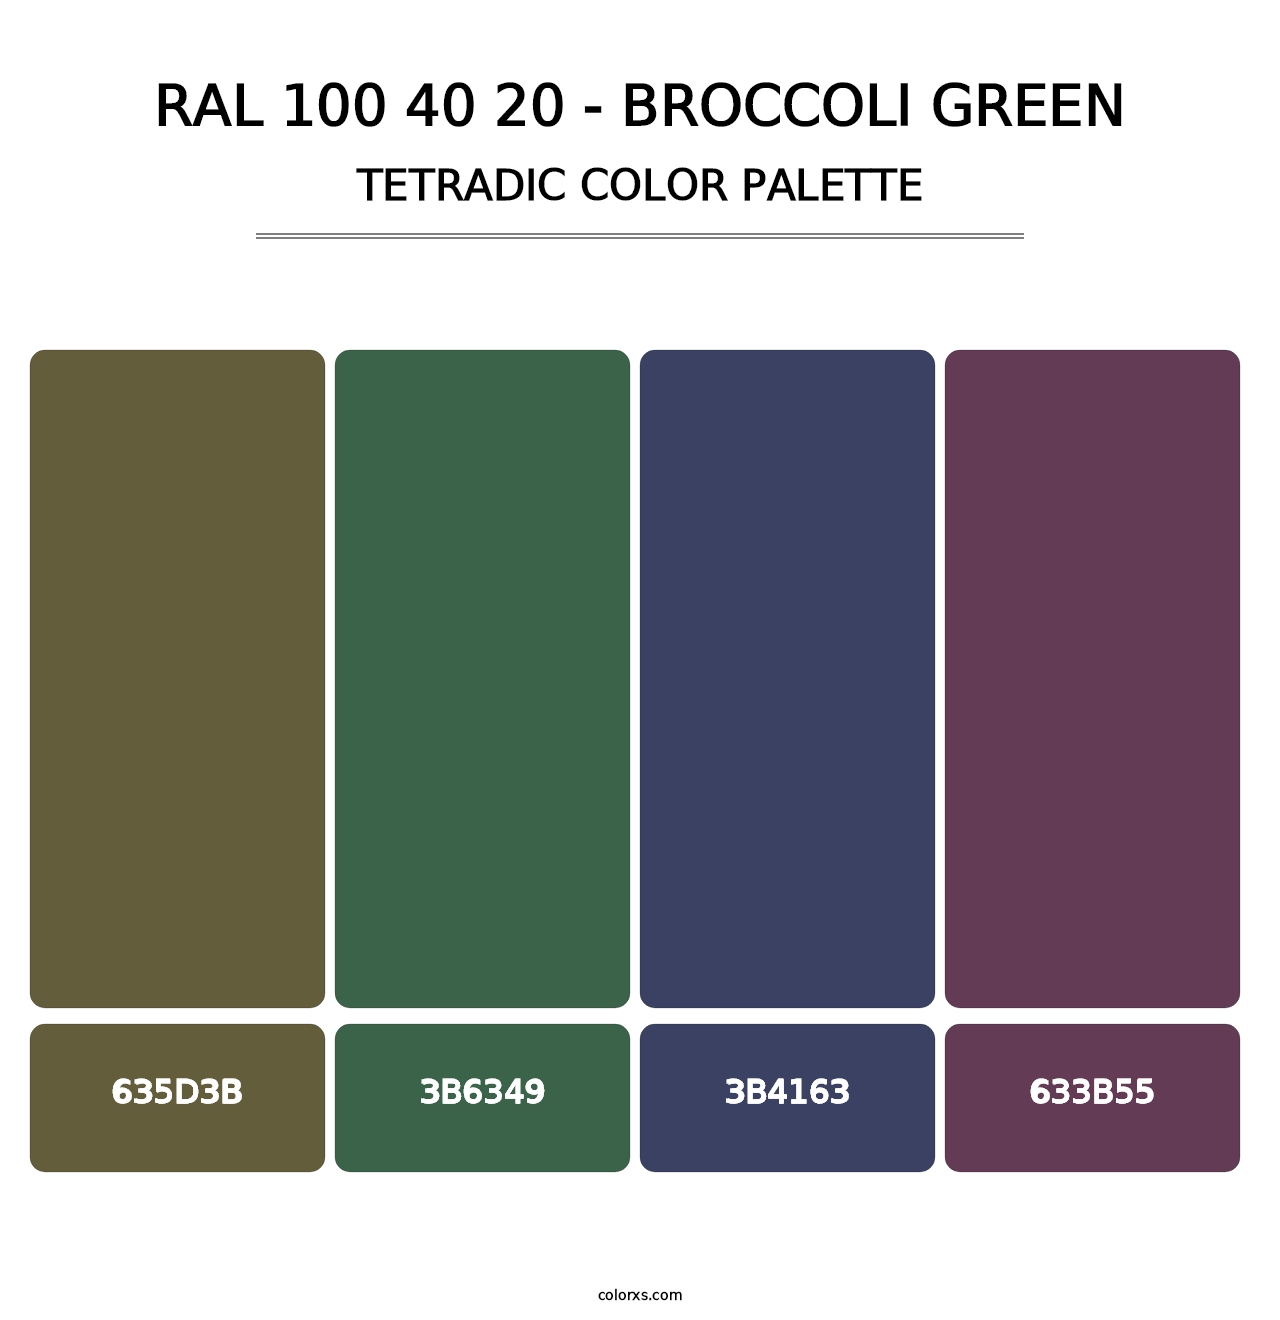 RAL 100 40 20 - Broccoli Green - Tetradic Color Palette